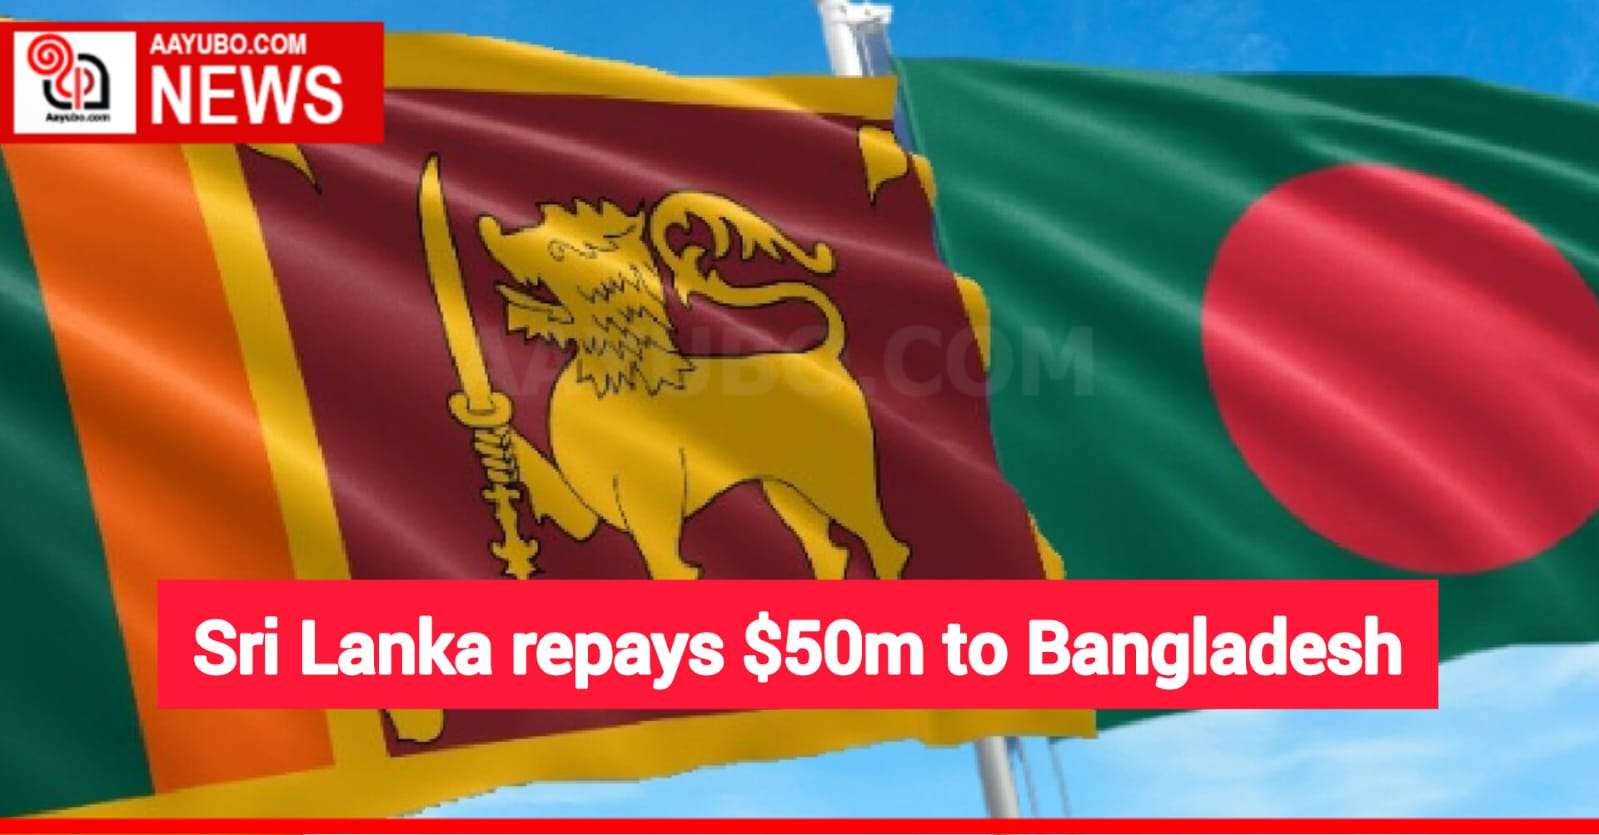 Sri Lanka repays $50m to Bangladesh